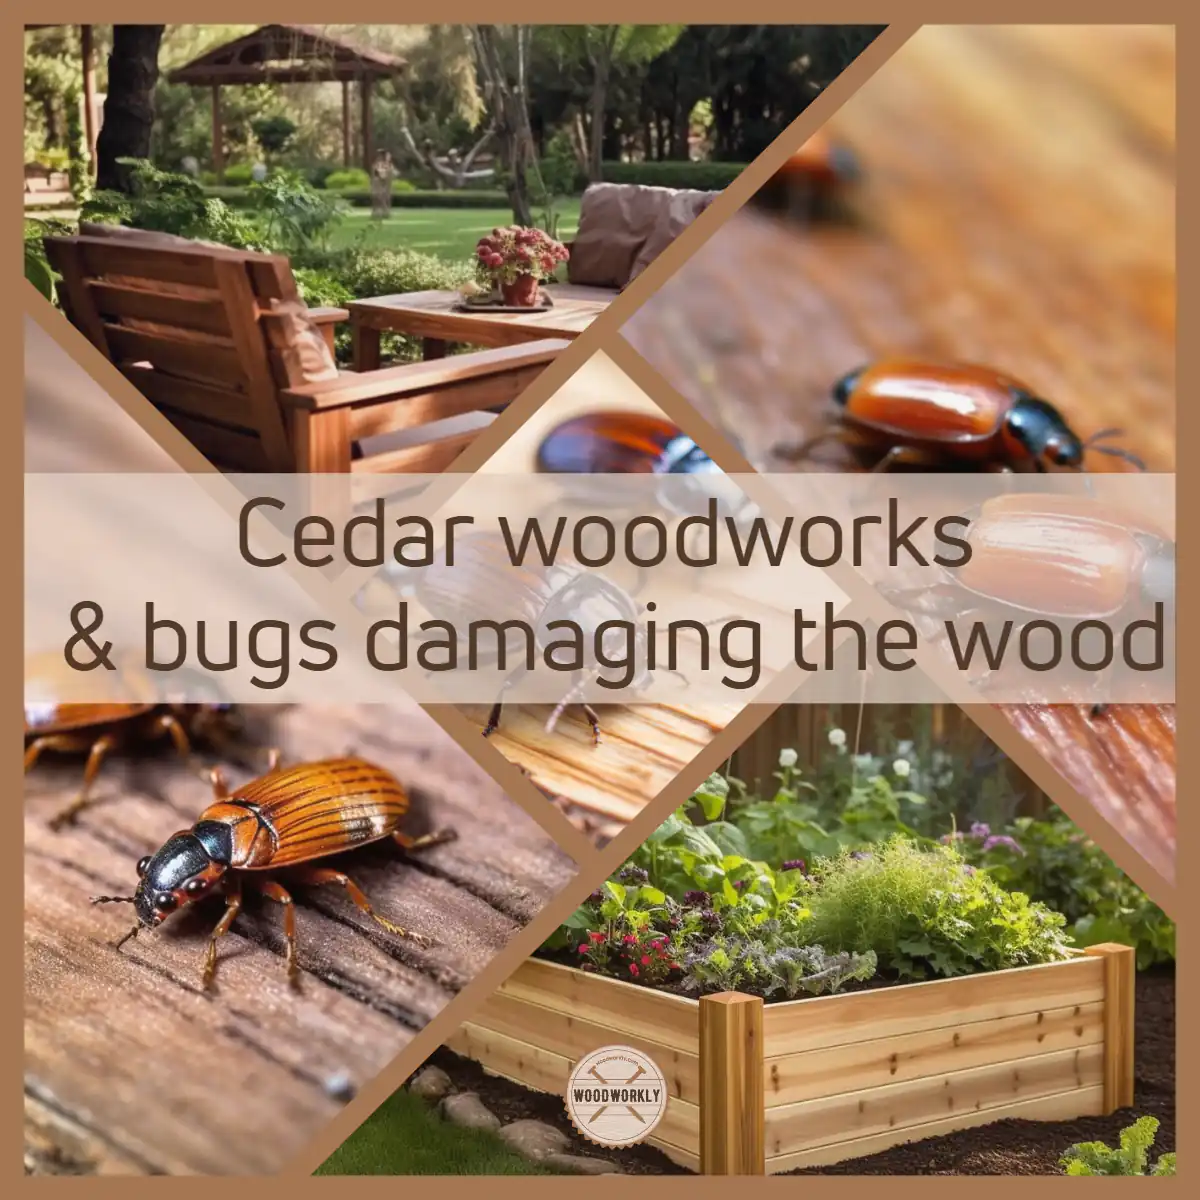 Cedar woodworks & bugs damaging the wood